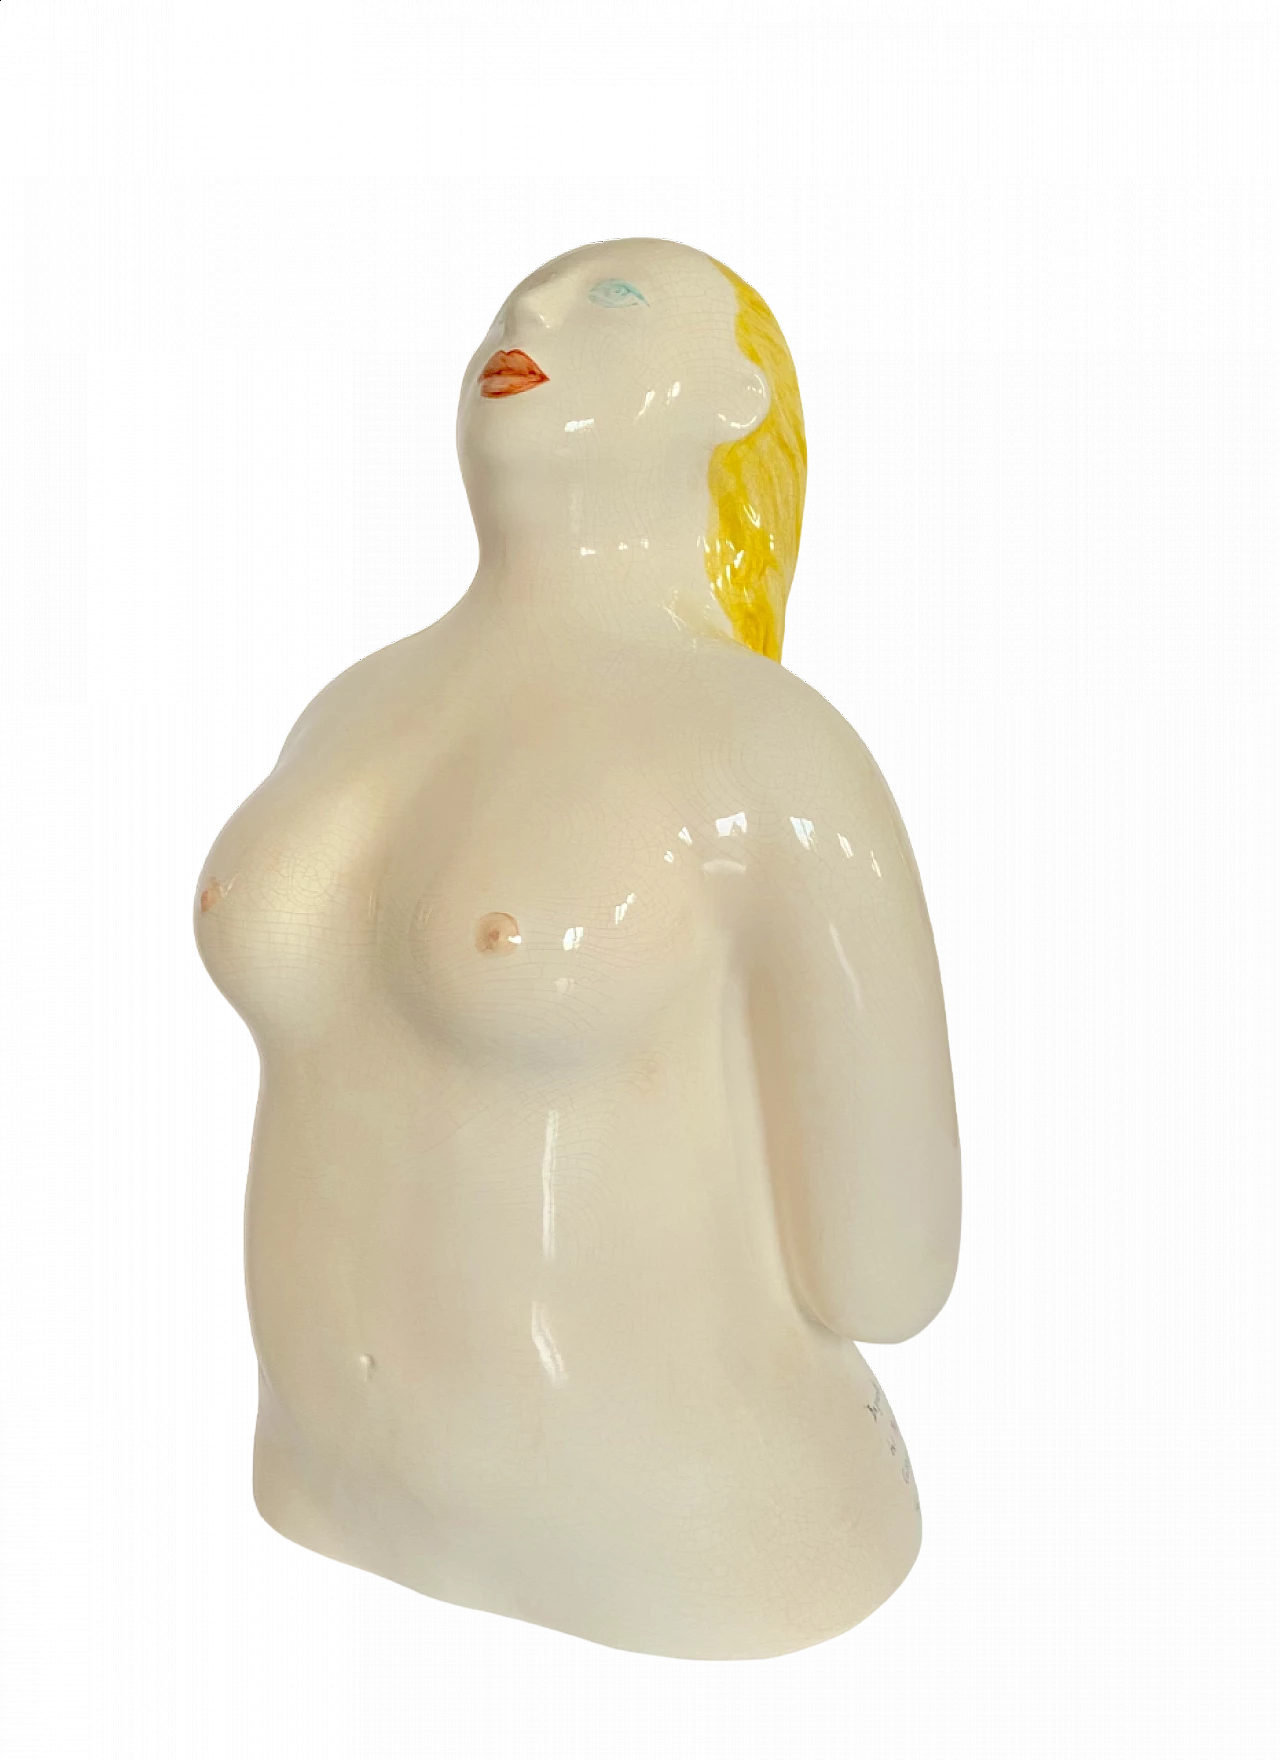 Ugo La Pietra, Bather, glazed ceramic sculpture, 1990 29